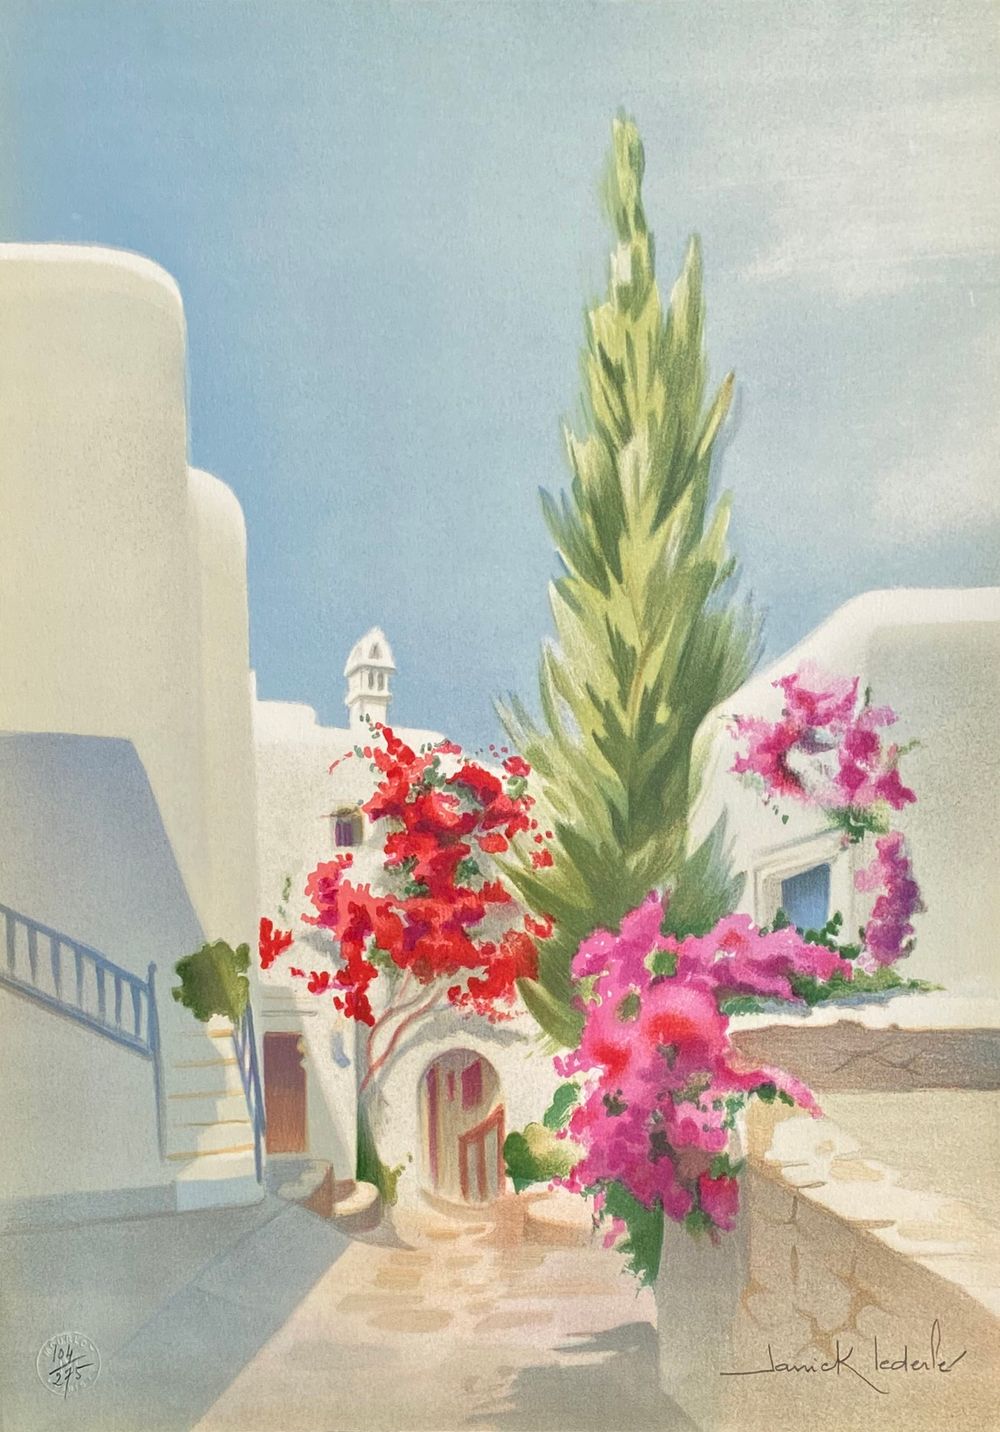 Grèce - Bougainvilliers en fleurs